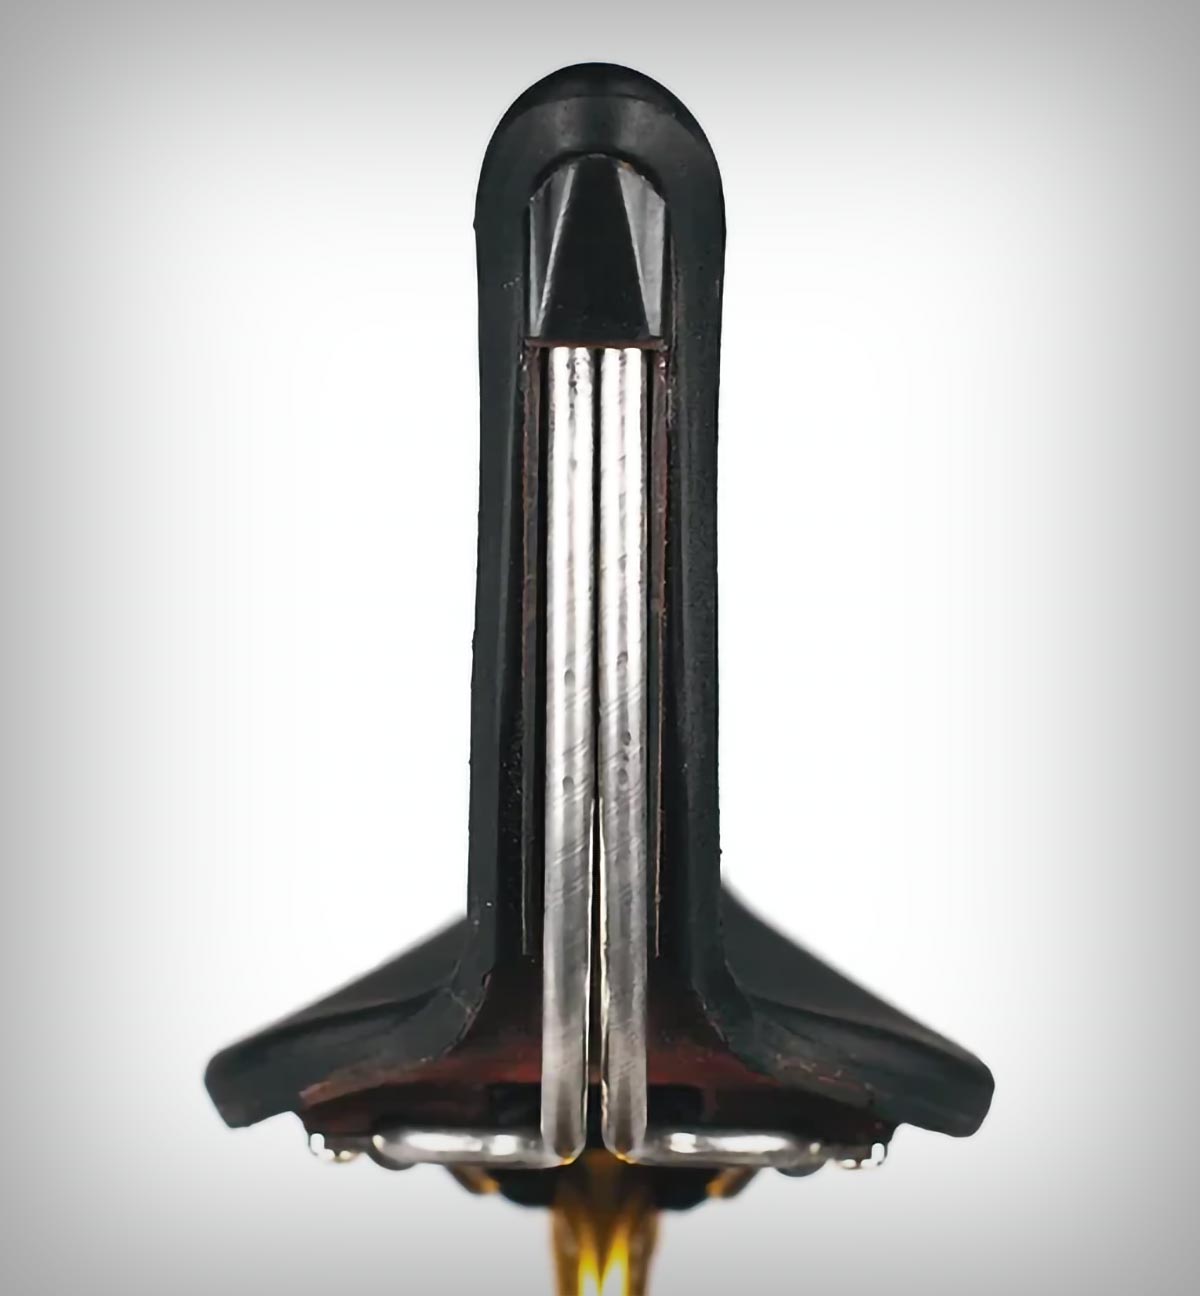 SaddleSpur, un sillín con respaldo de diseño 'muy sugerente' que